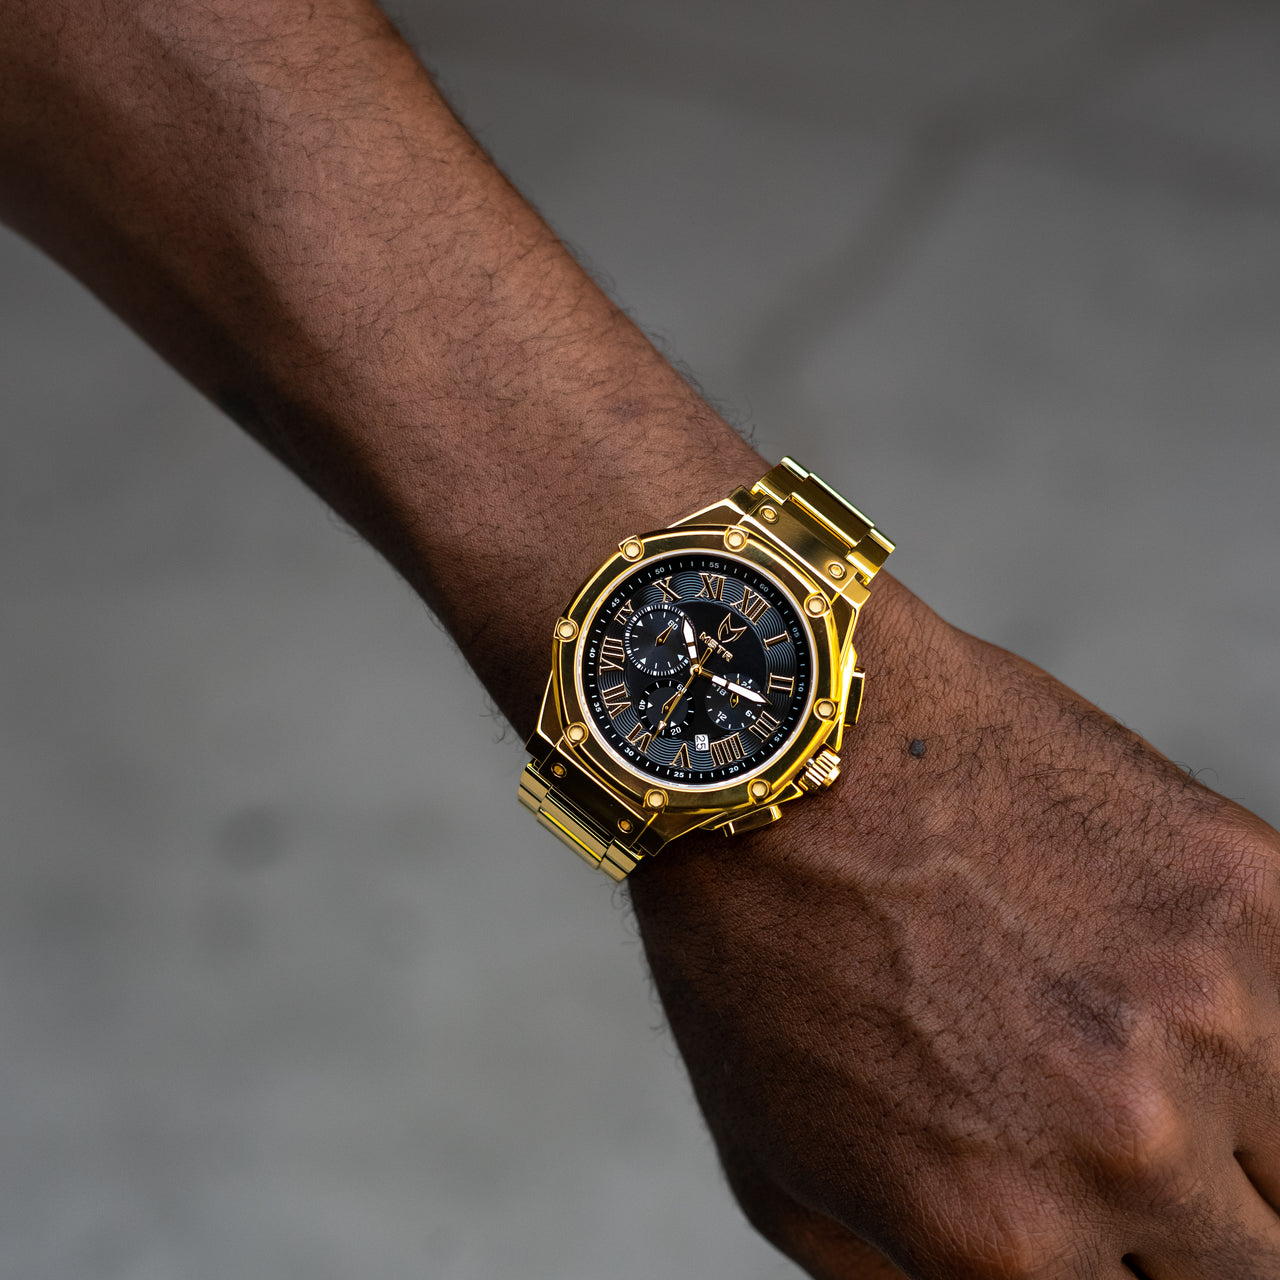 MSTR Ambassador 1001SS gold watch on models wrist